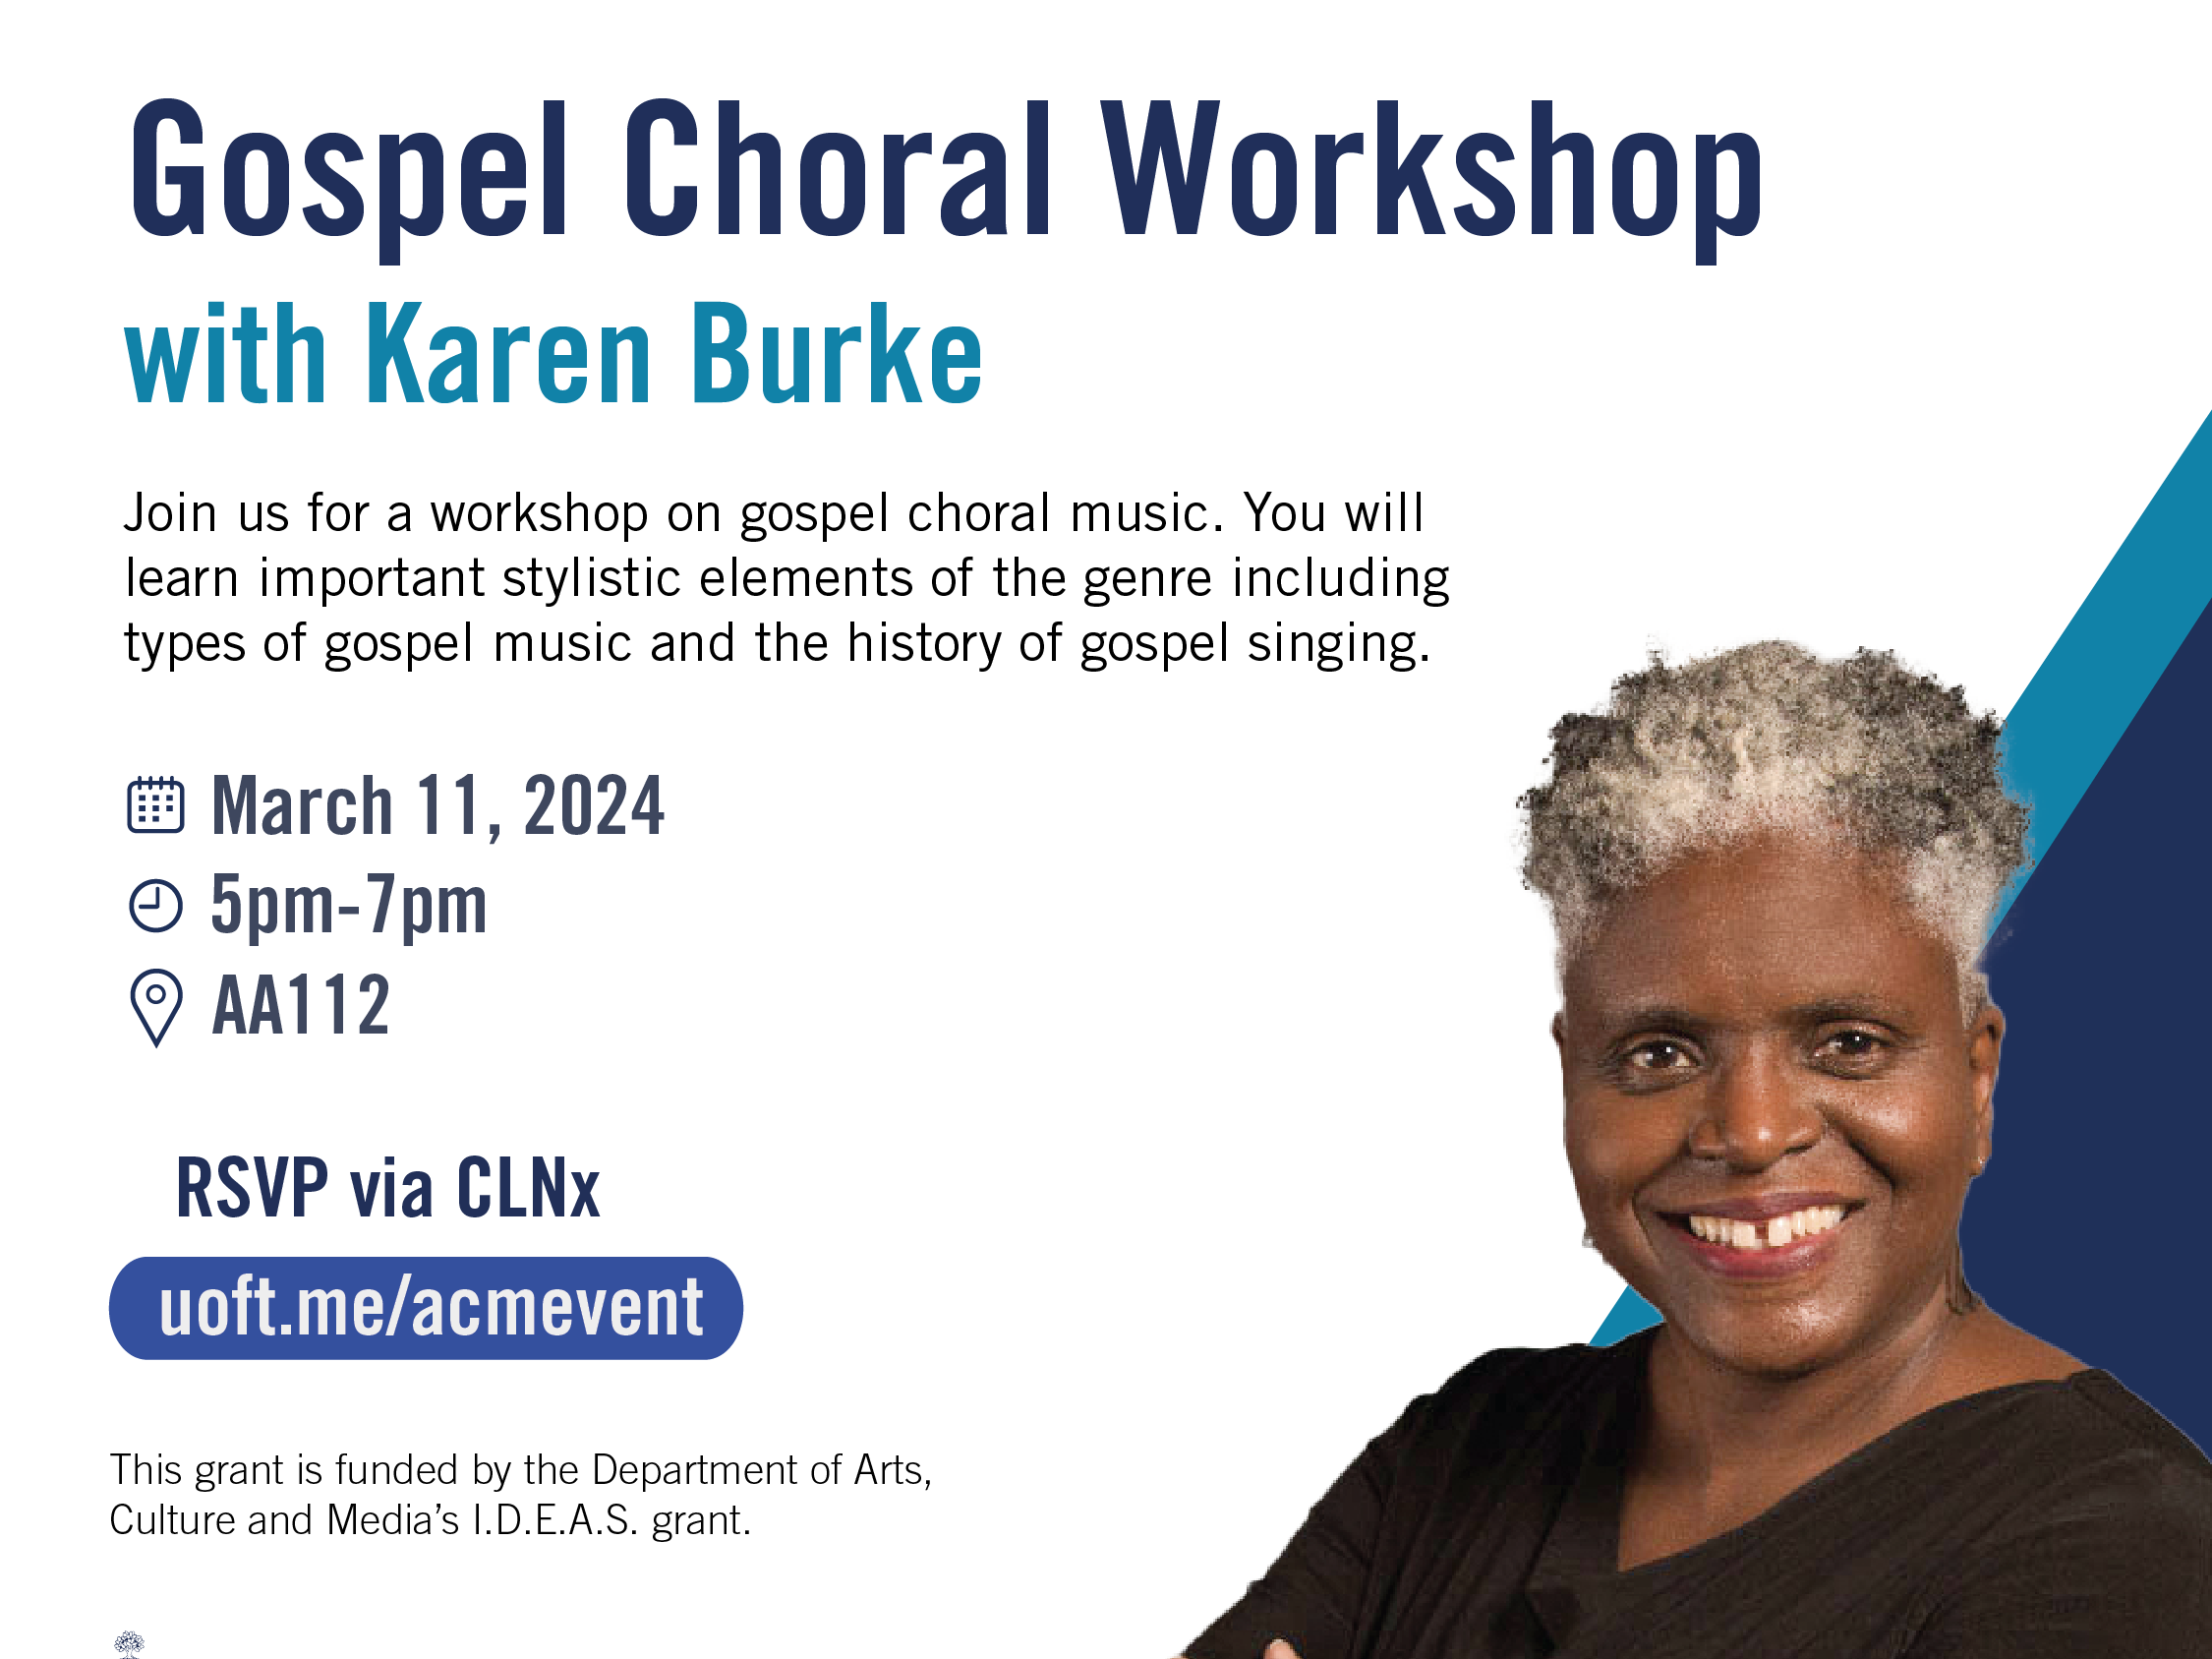 Gospel Choral Workshop with Karen Burke headshot on the bottom right